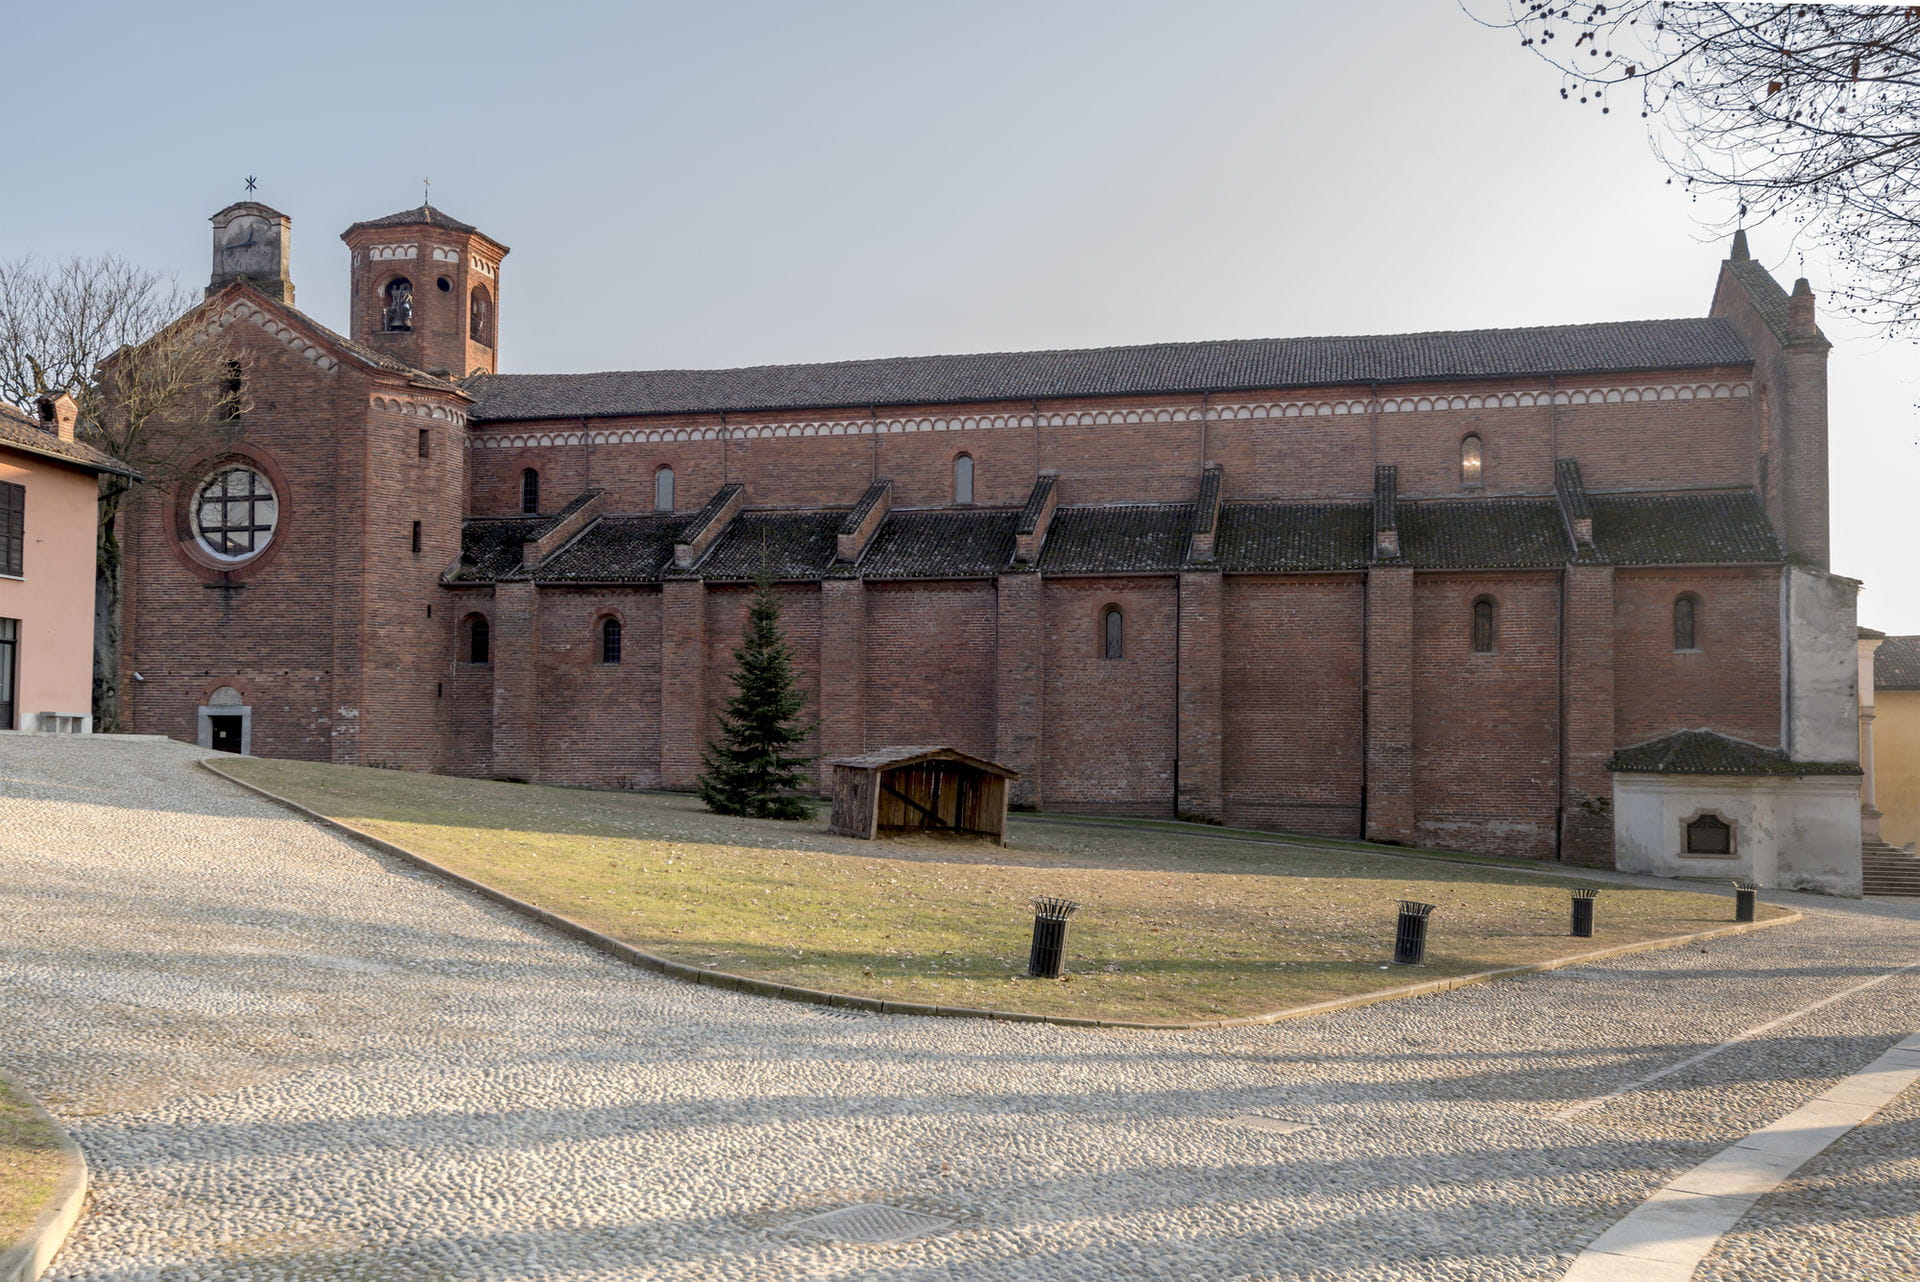 High quality hoto of Morimondo Abbey - Italy